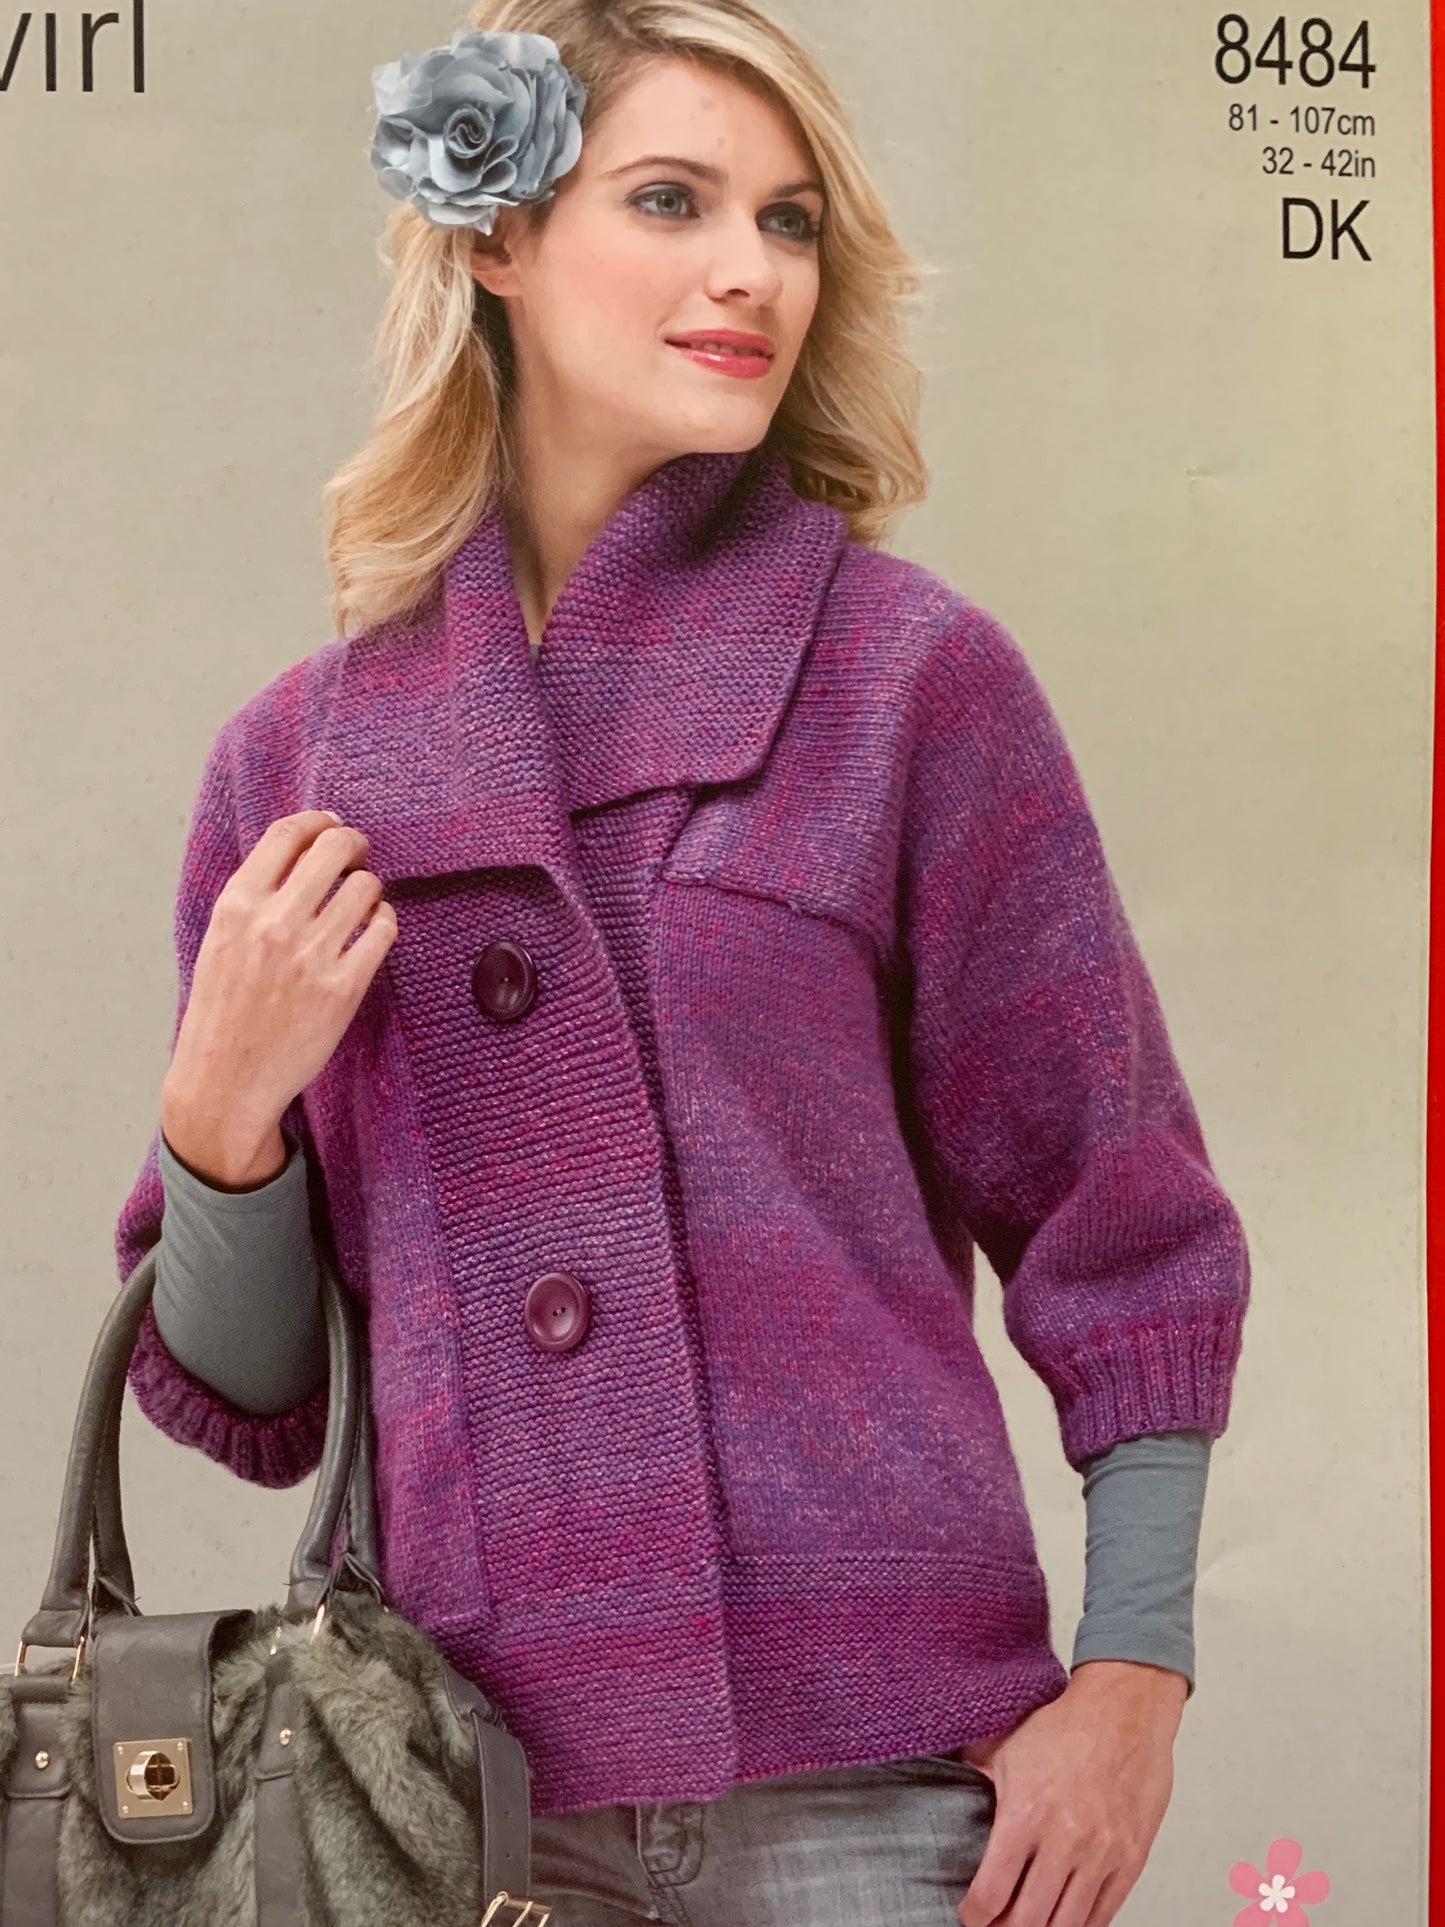 8484 Stylecraft Twirl dk ladies jacket knitting pattern